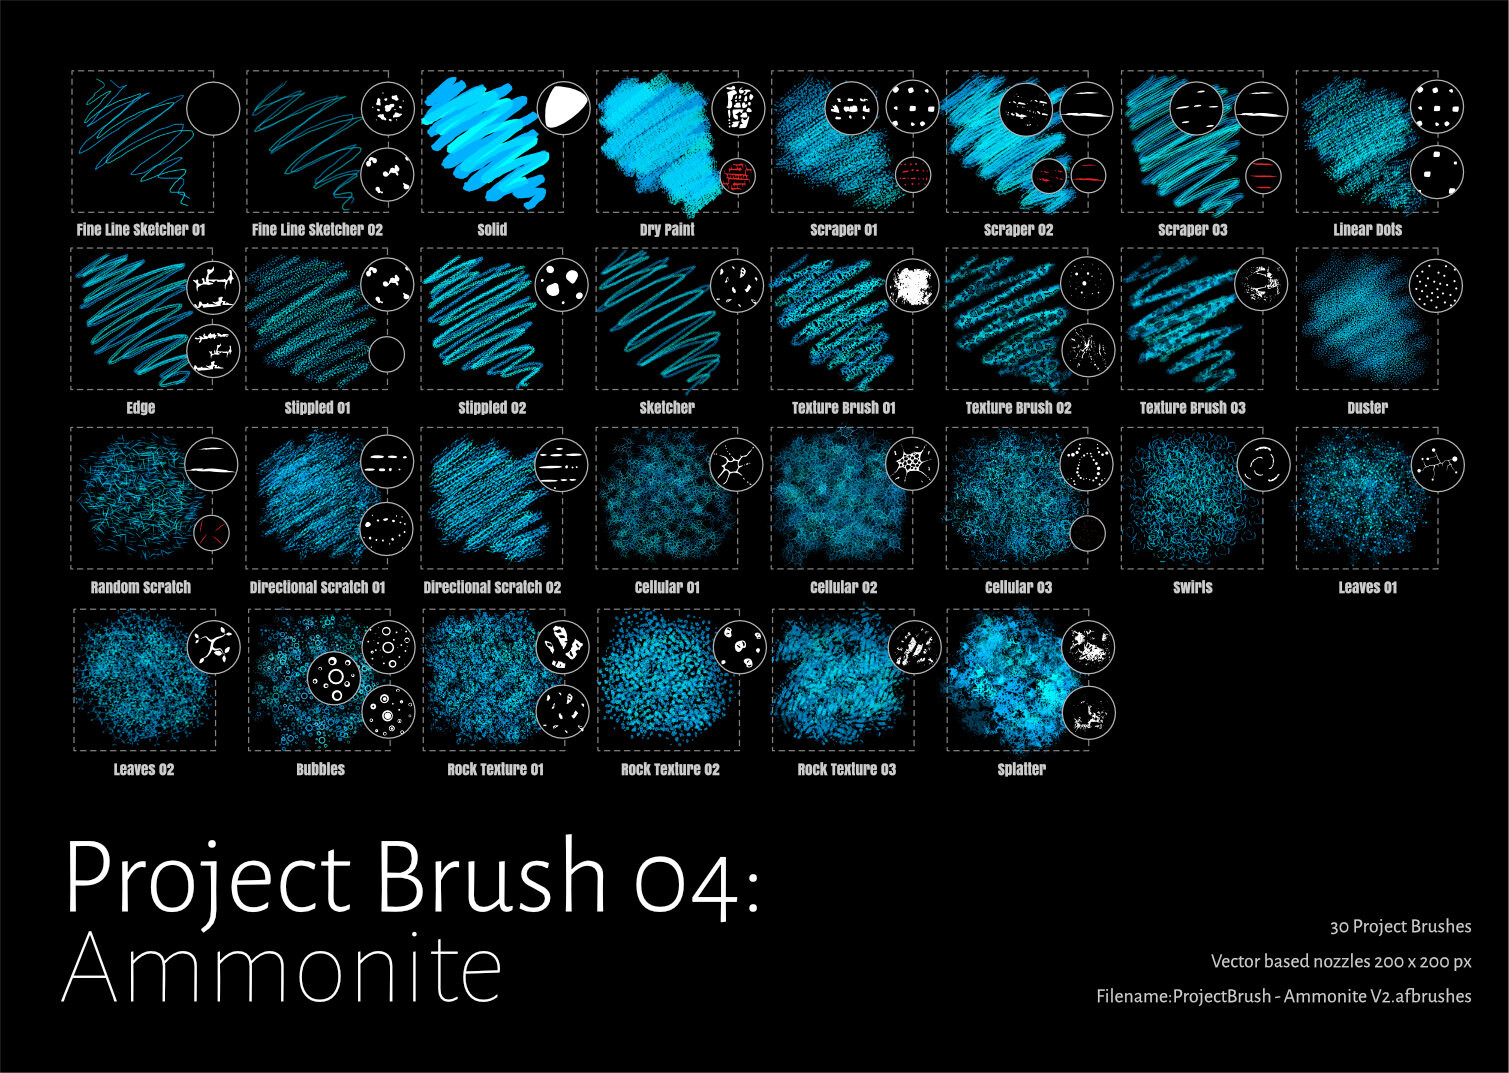 Project Brush 04:Ammonite
30 Raster Brushes